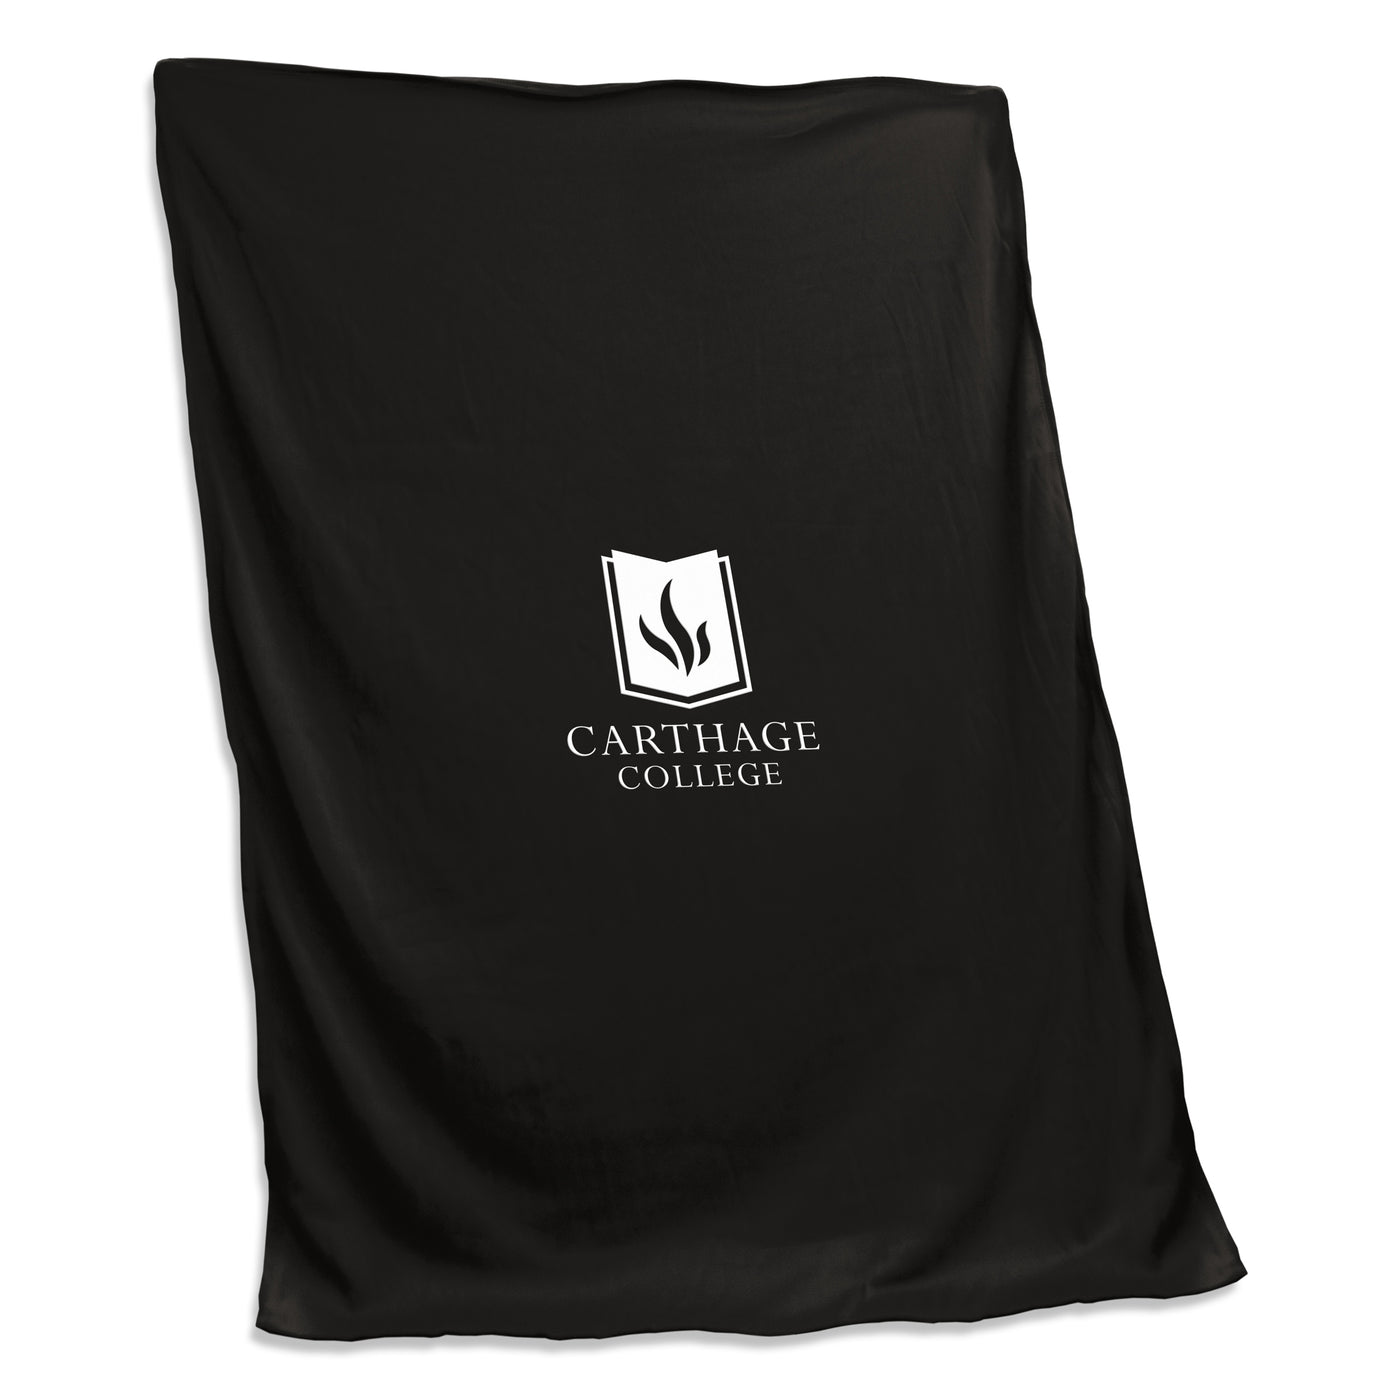 Carthage College Black Screened  Sweatshirt Blanket